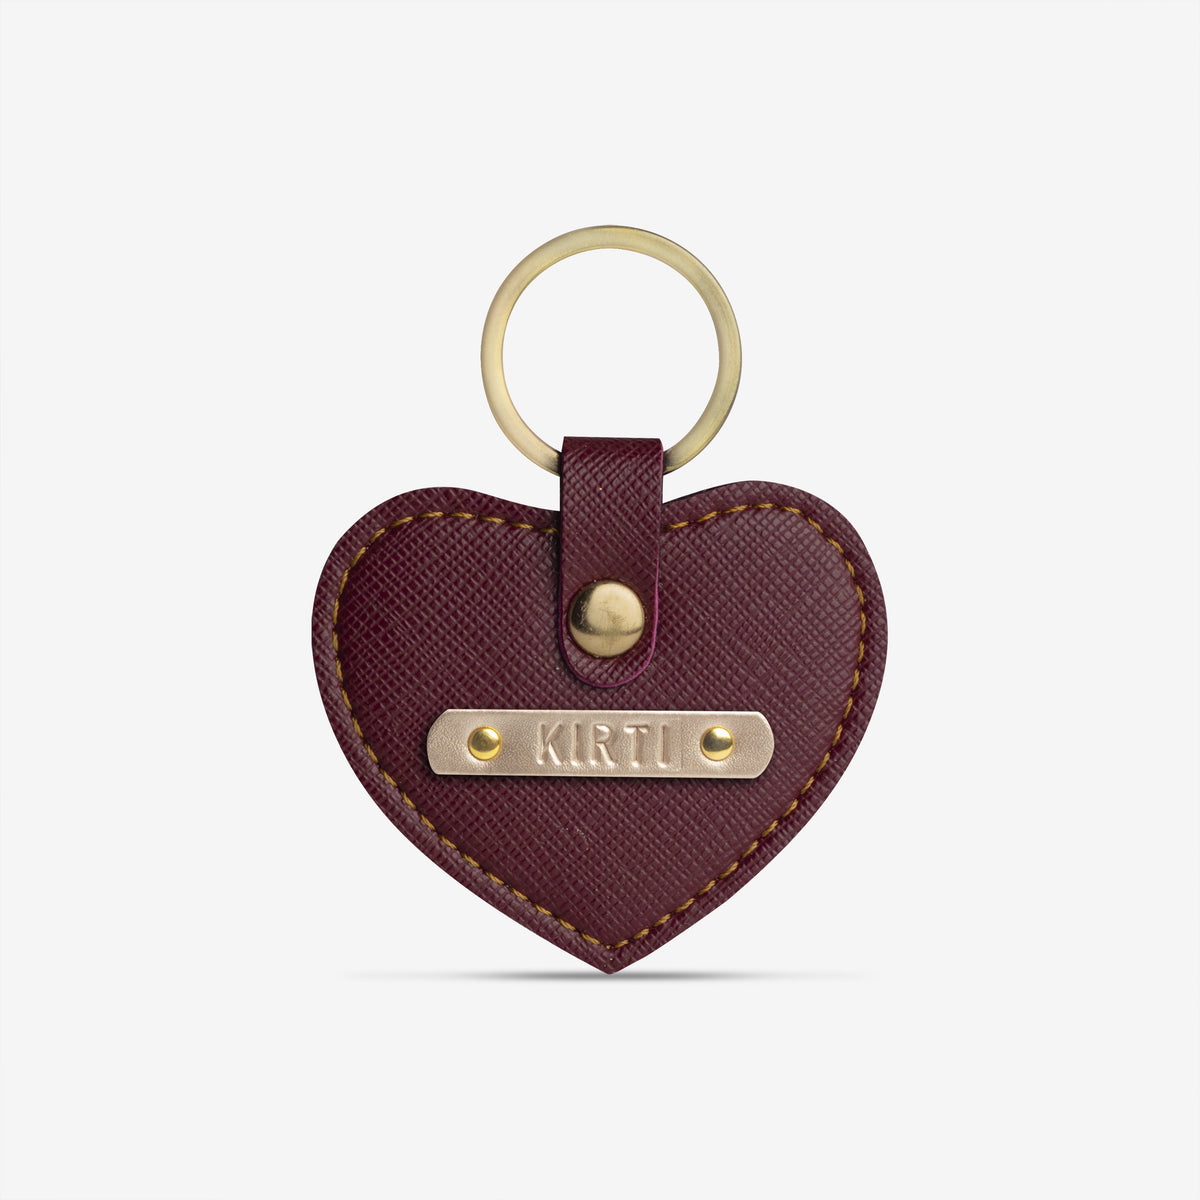 The Messy Corner Keychain Personalised Heart Keychain